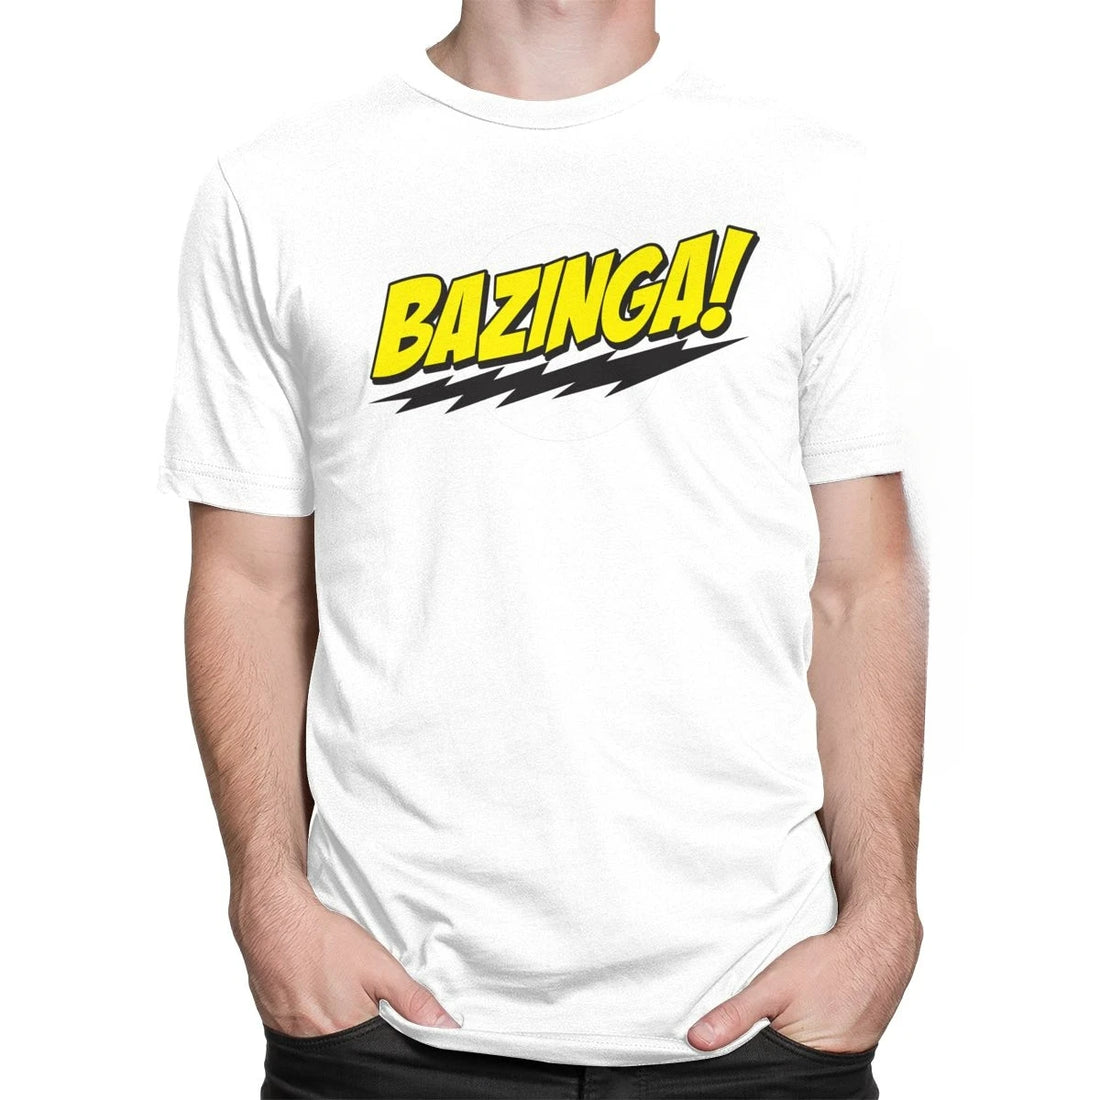 100% Cotton T-shirt Geek TBBT T Shirt Men Handsome Sheldon Cooper Tee Tops Birthday Gift Idea The Big Bang Theory Bazinga